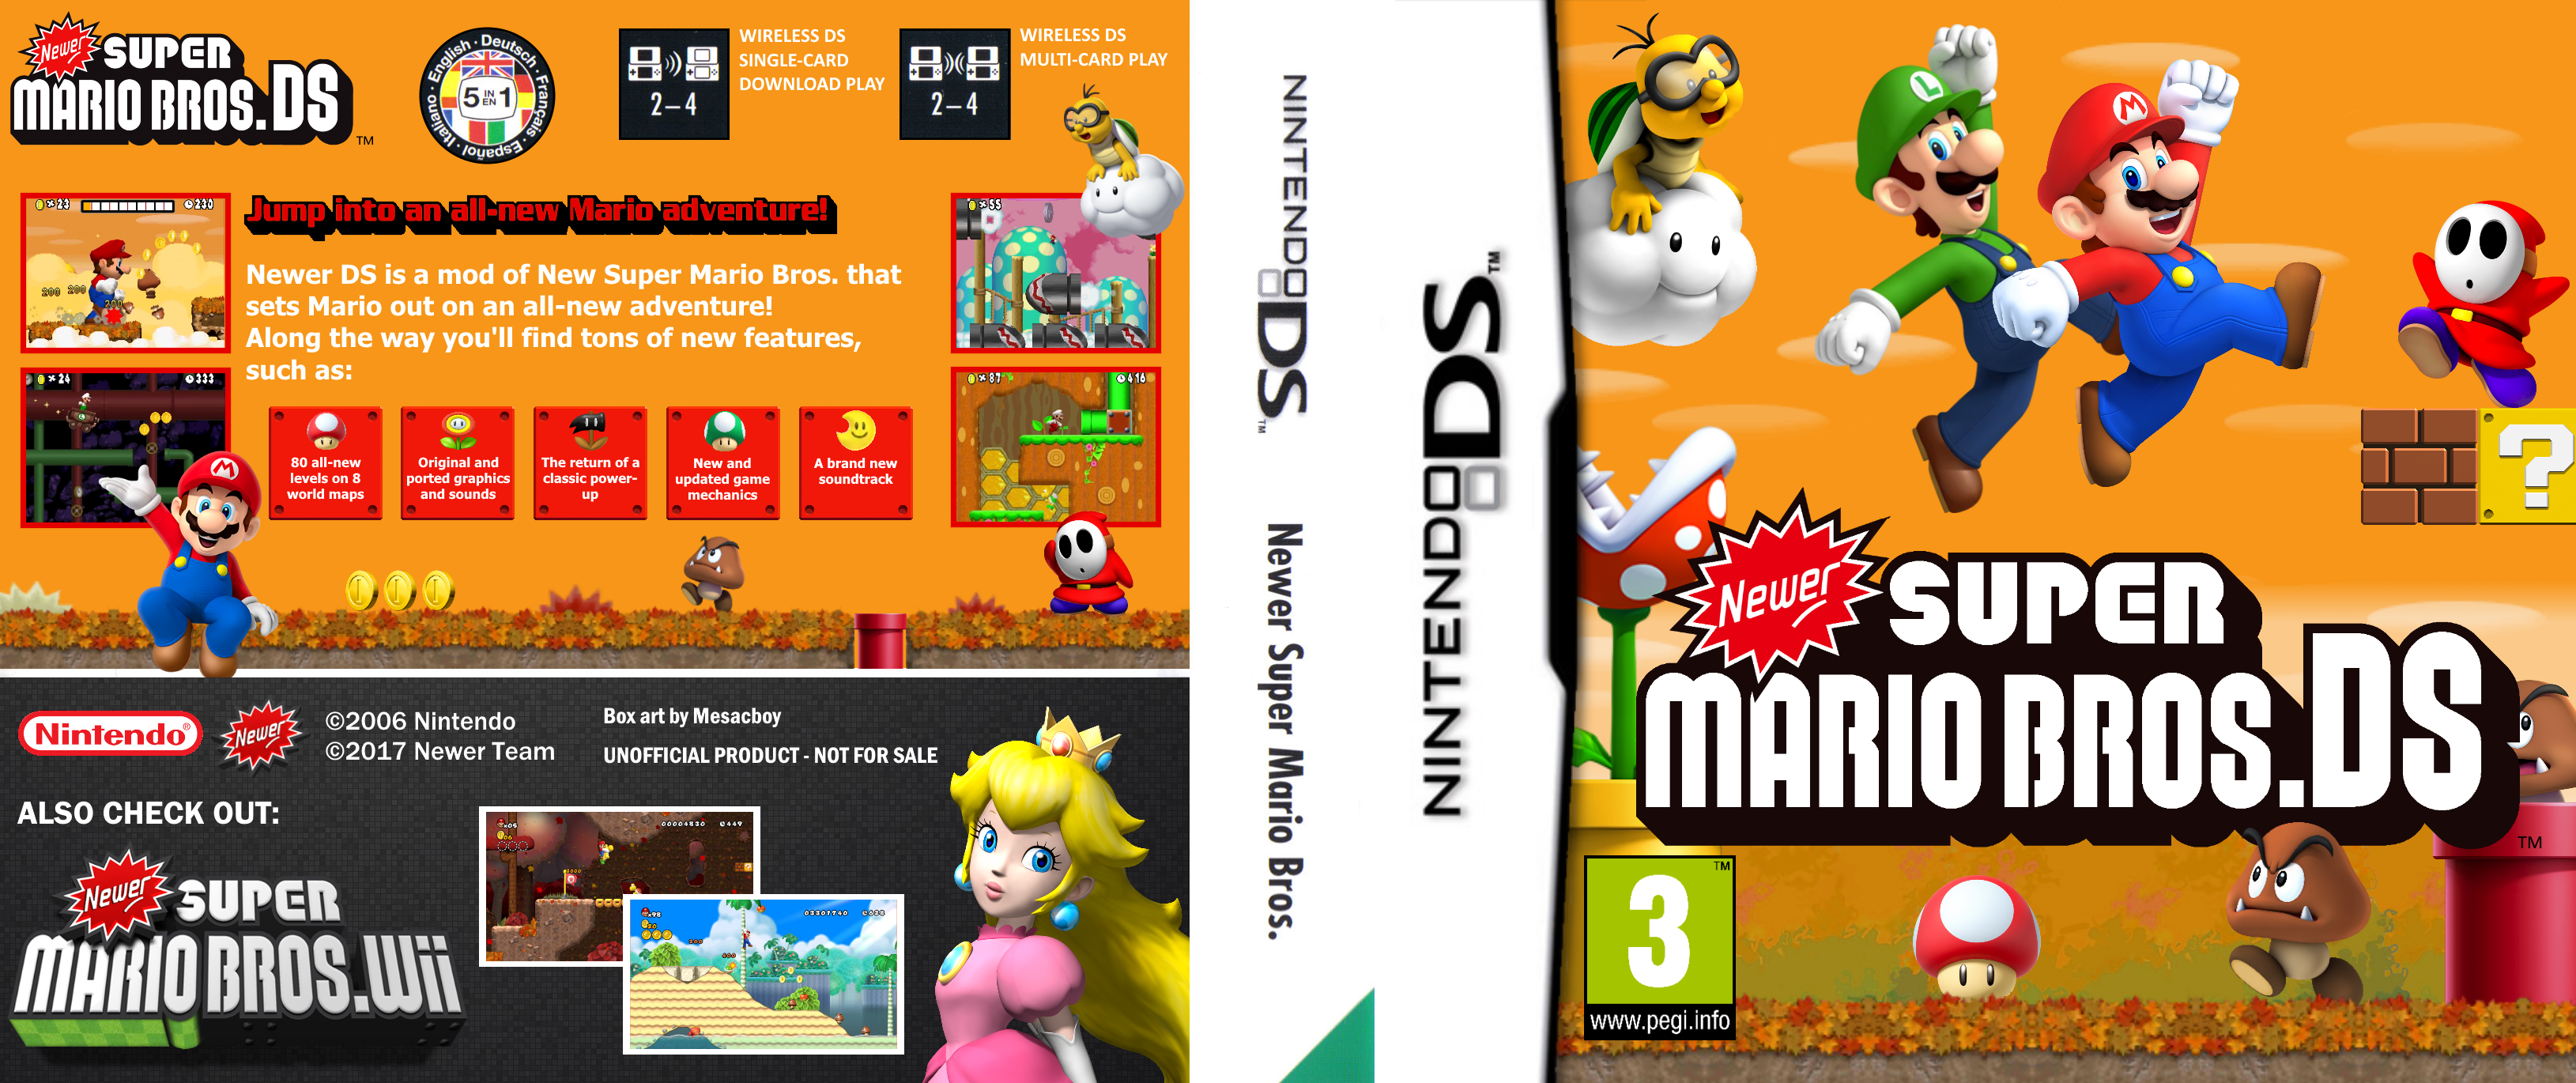 Newer Super Mario Bros. DS box cover